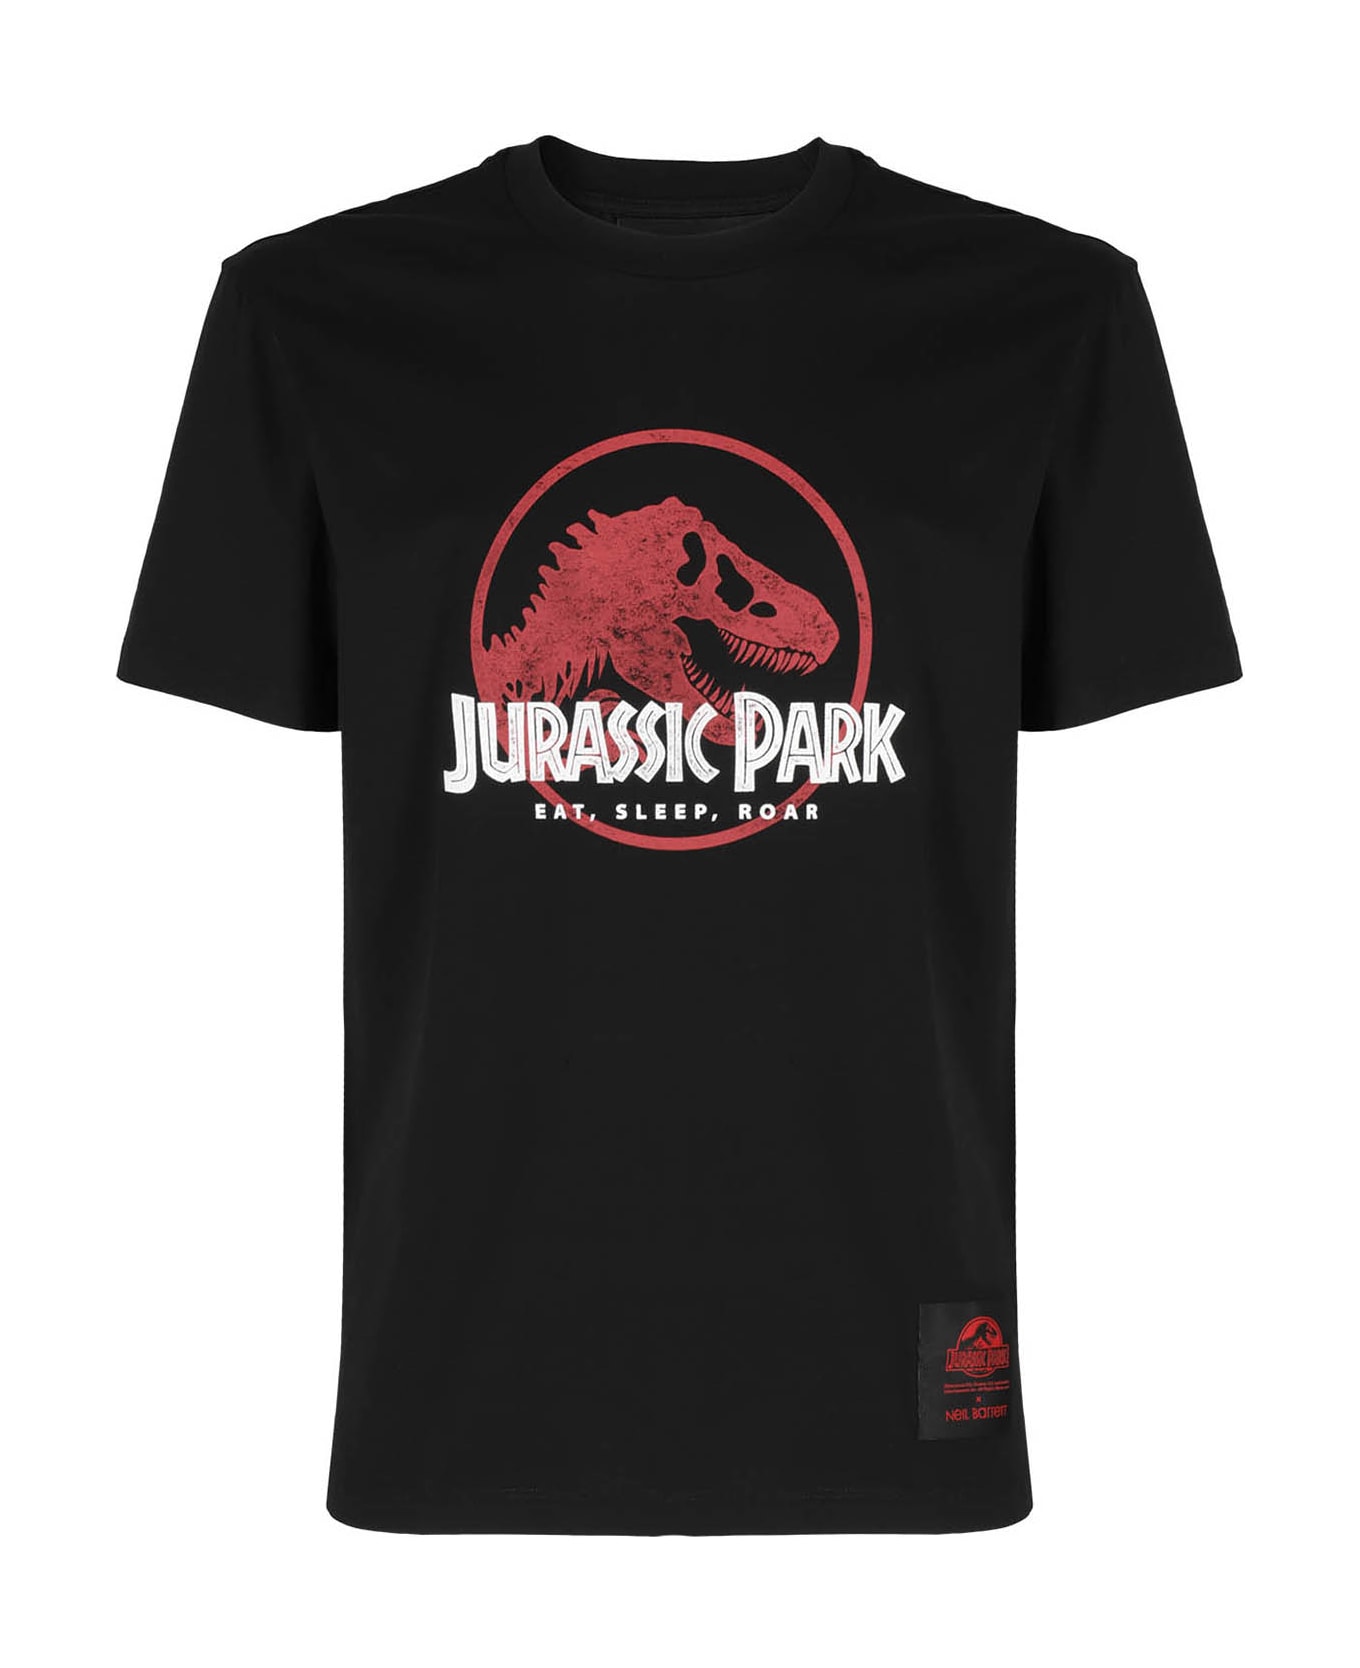 Neil Barrett Jurassic Park Tshirt - Blk Whi Red